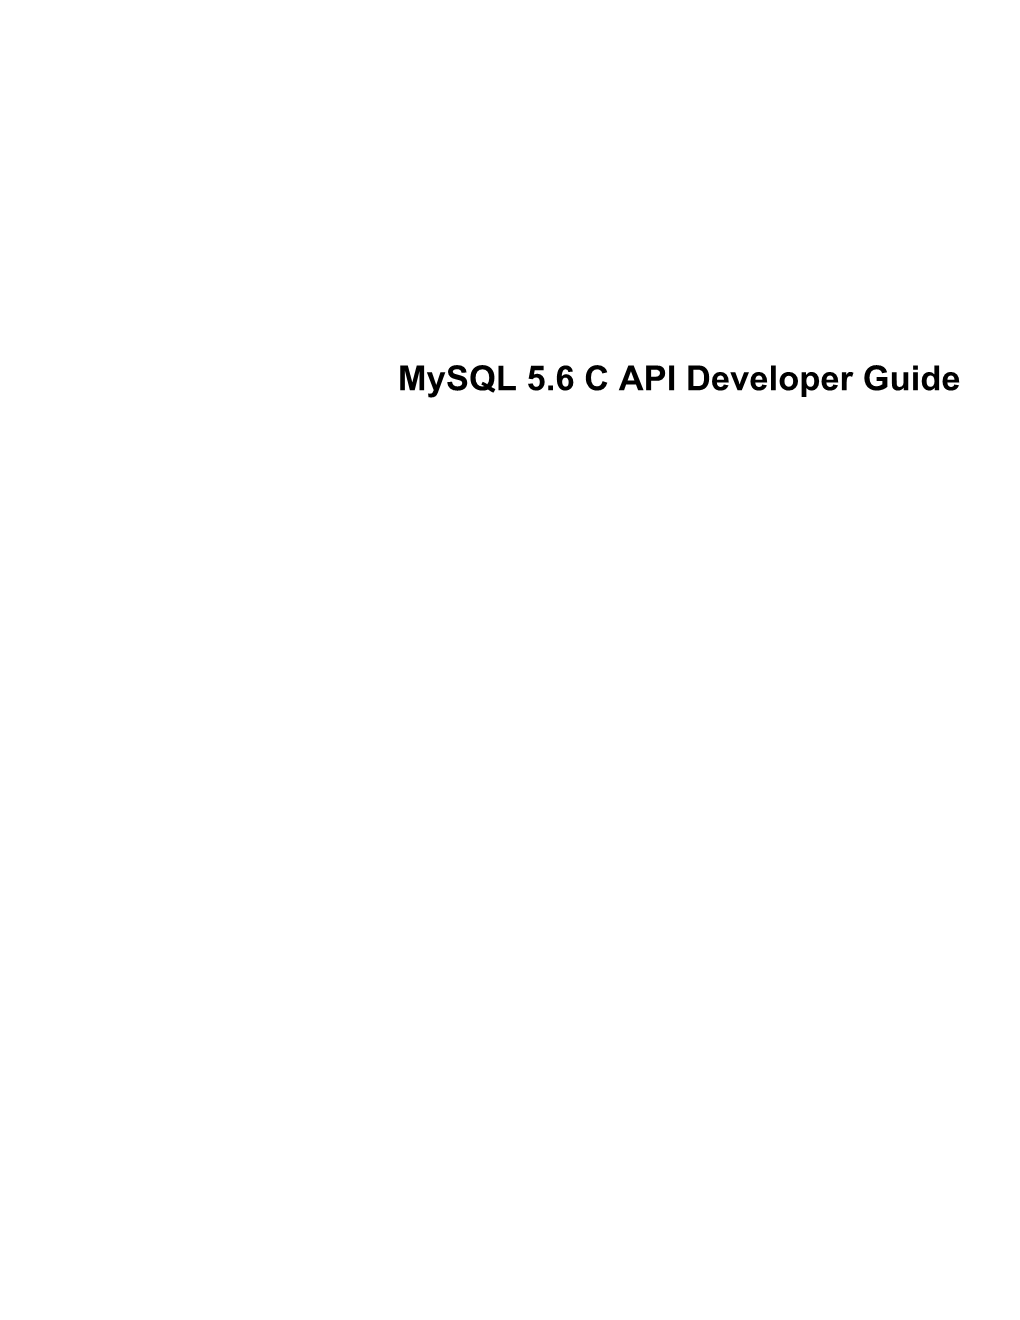 Mysql 5.6 C API Developer Guide Abstract